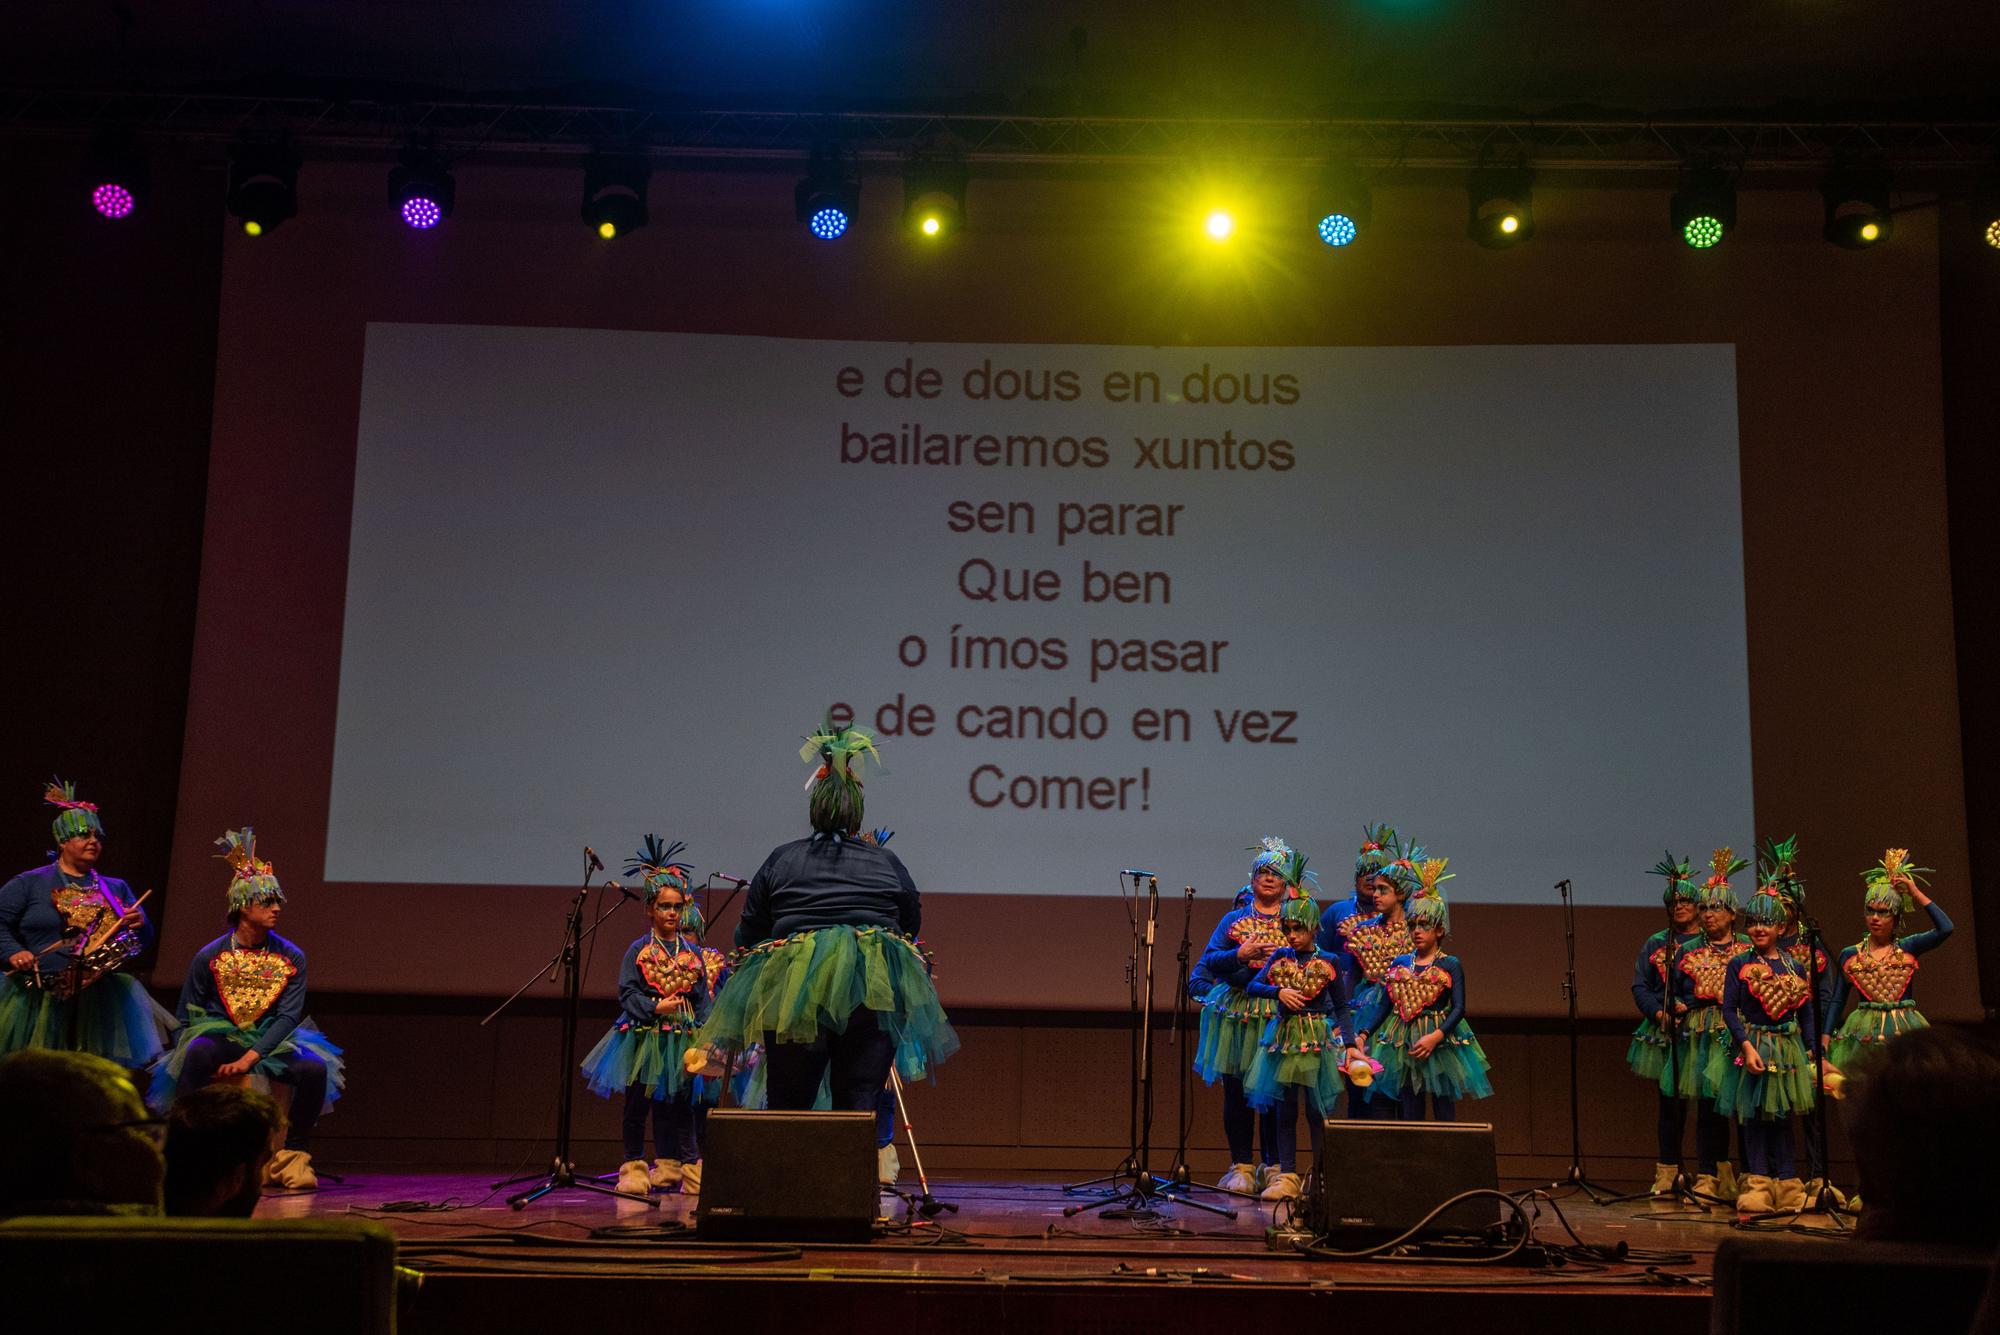 Carnaval A Coruña 2023: concurso de comparsas